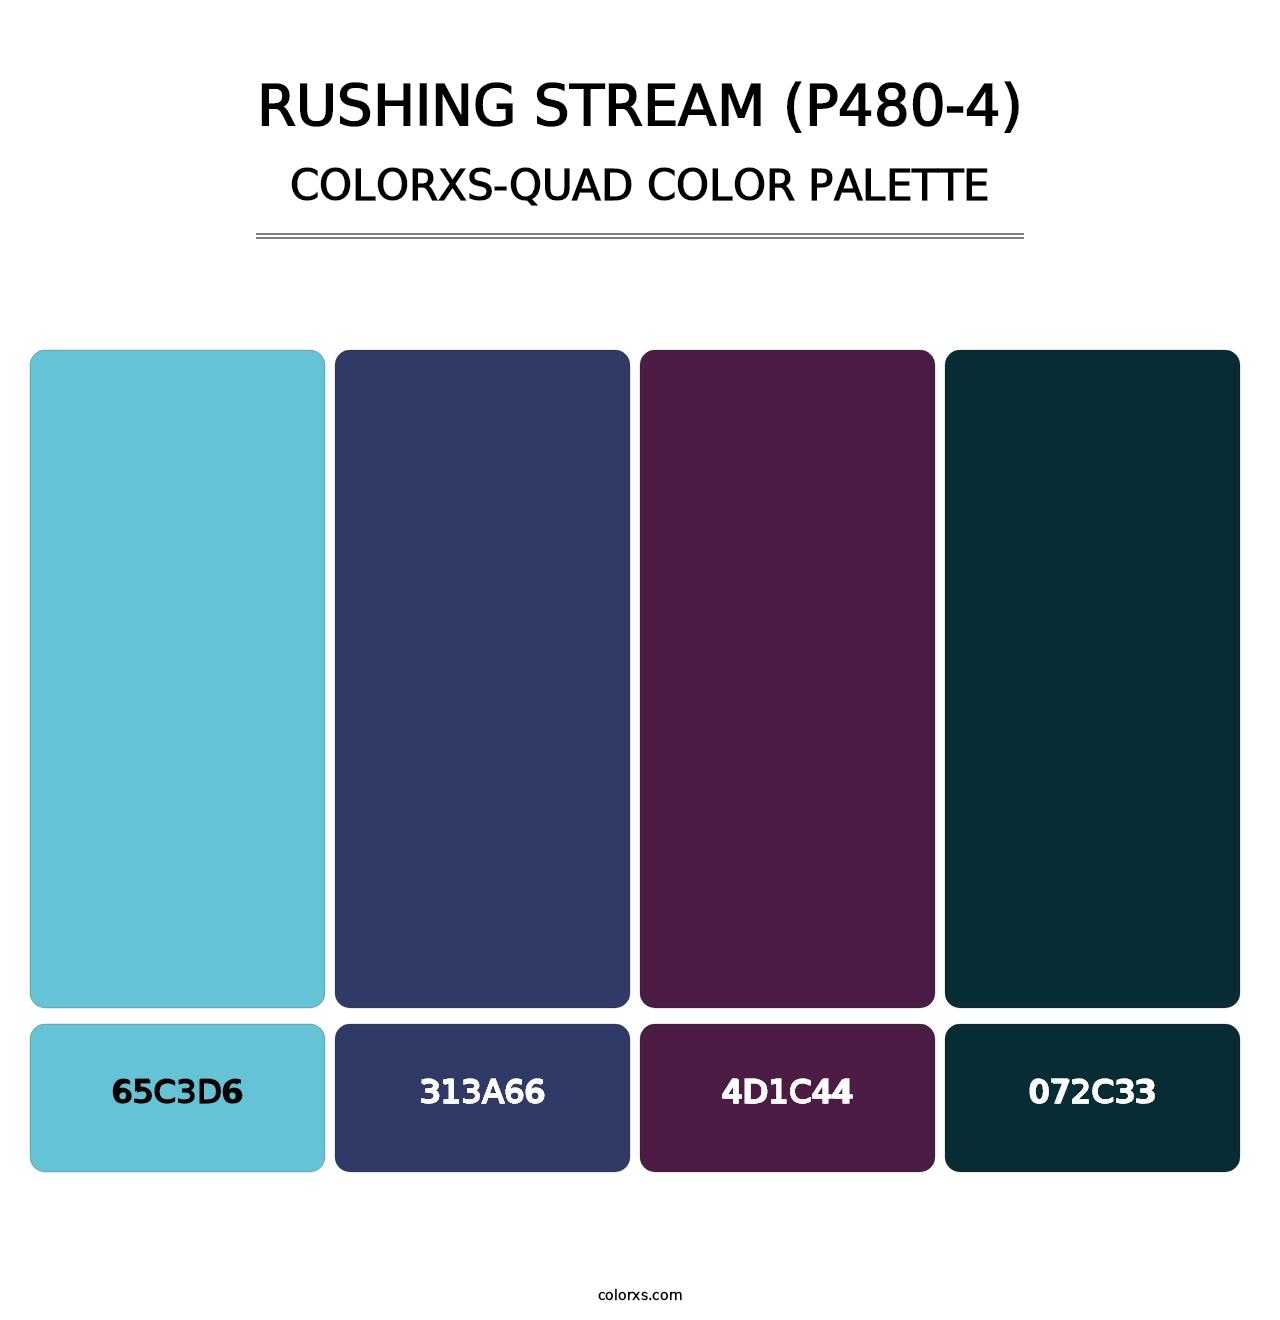 Rushing Stream (P480-4) - Colorxs Quad Palette